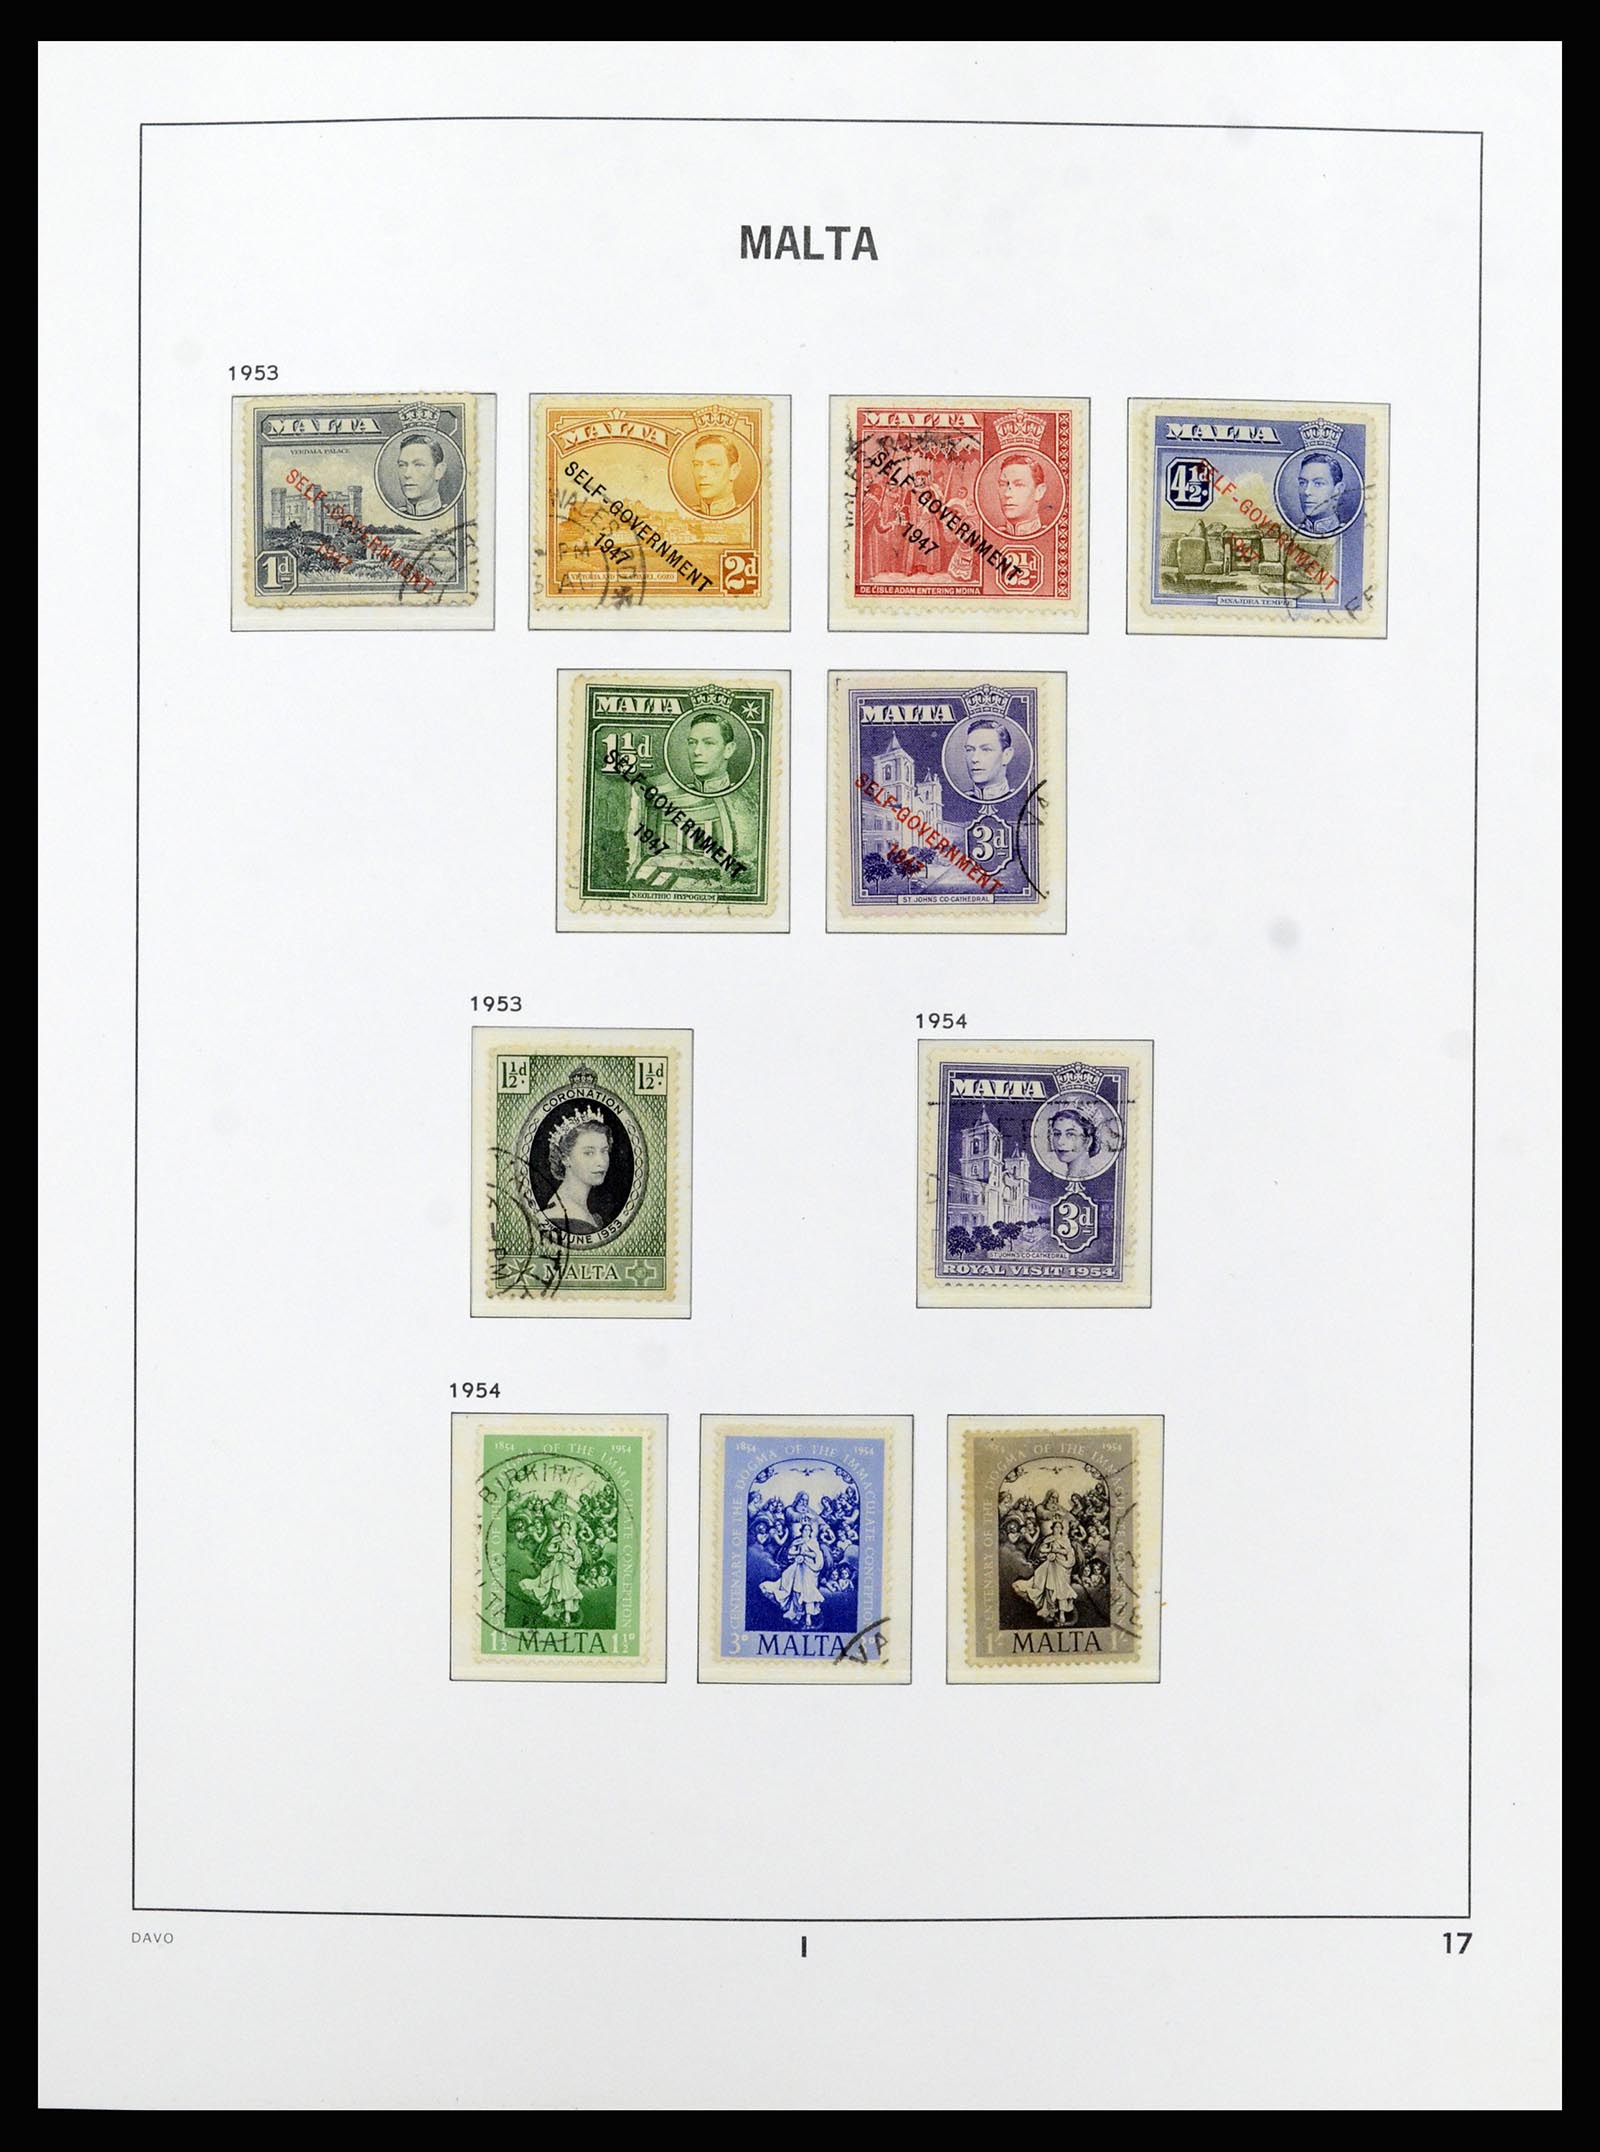 37212 017 - Stamp collection 37212 Malta 1863-1989.